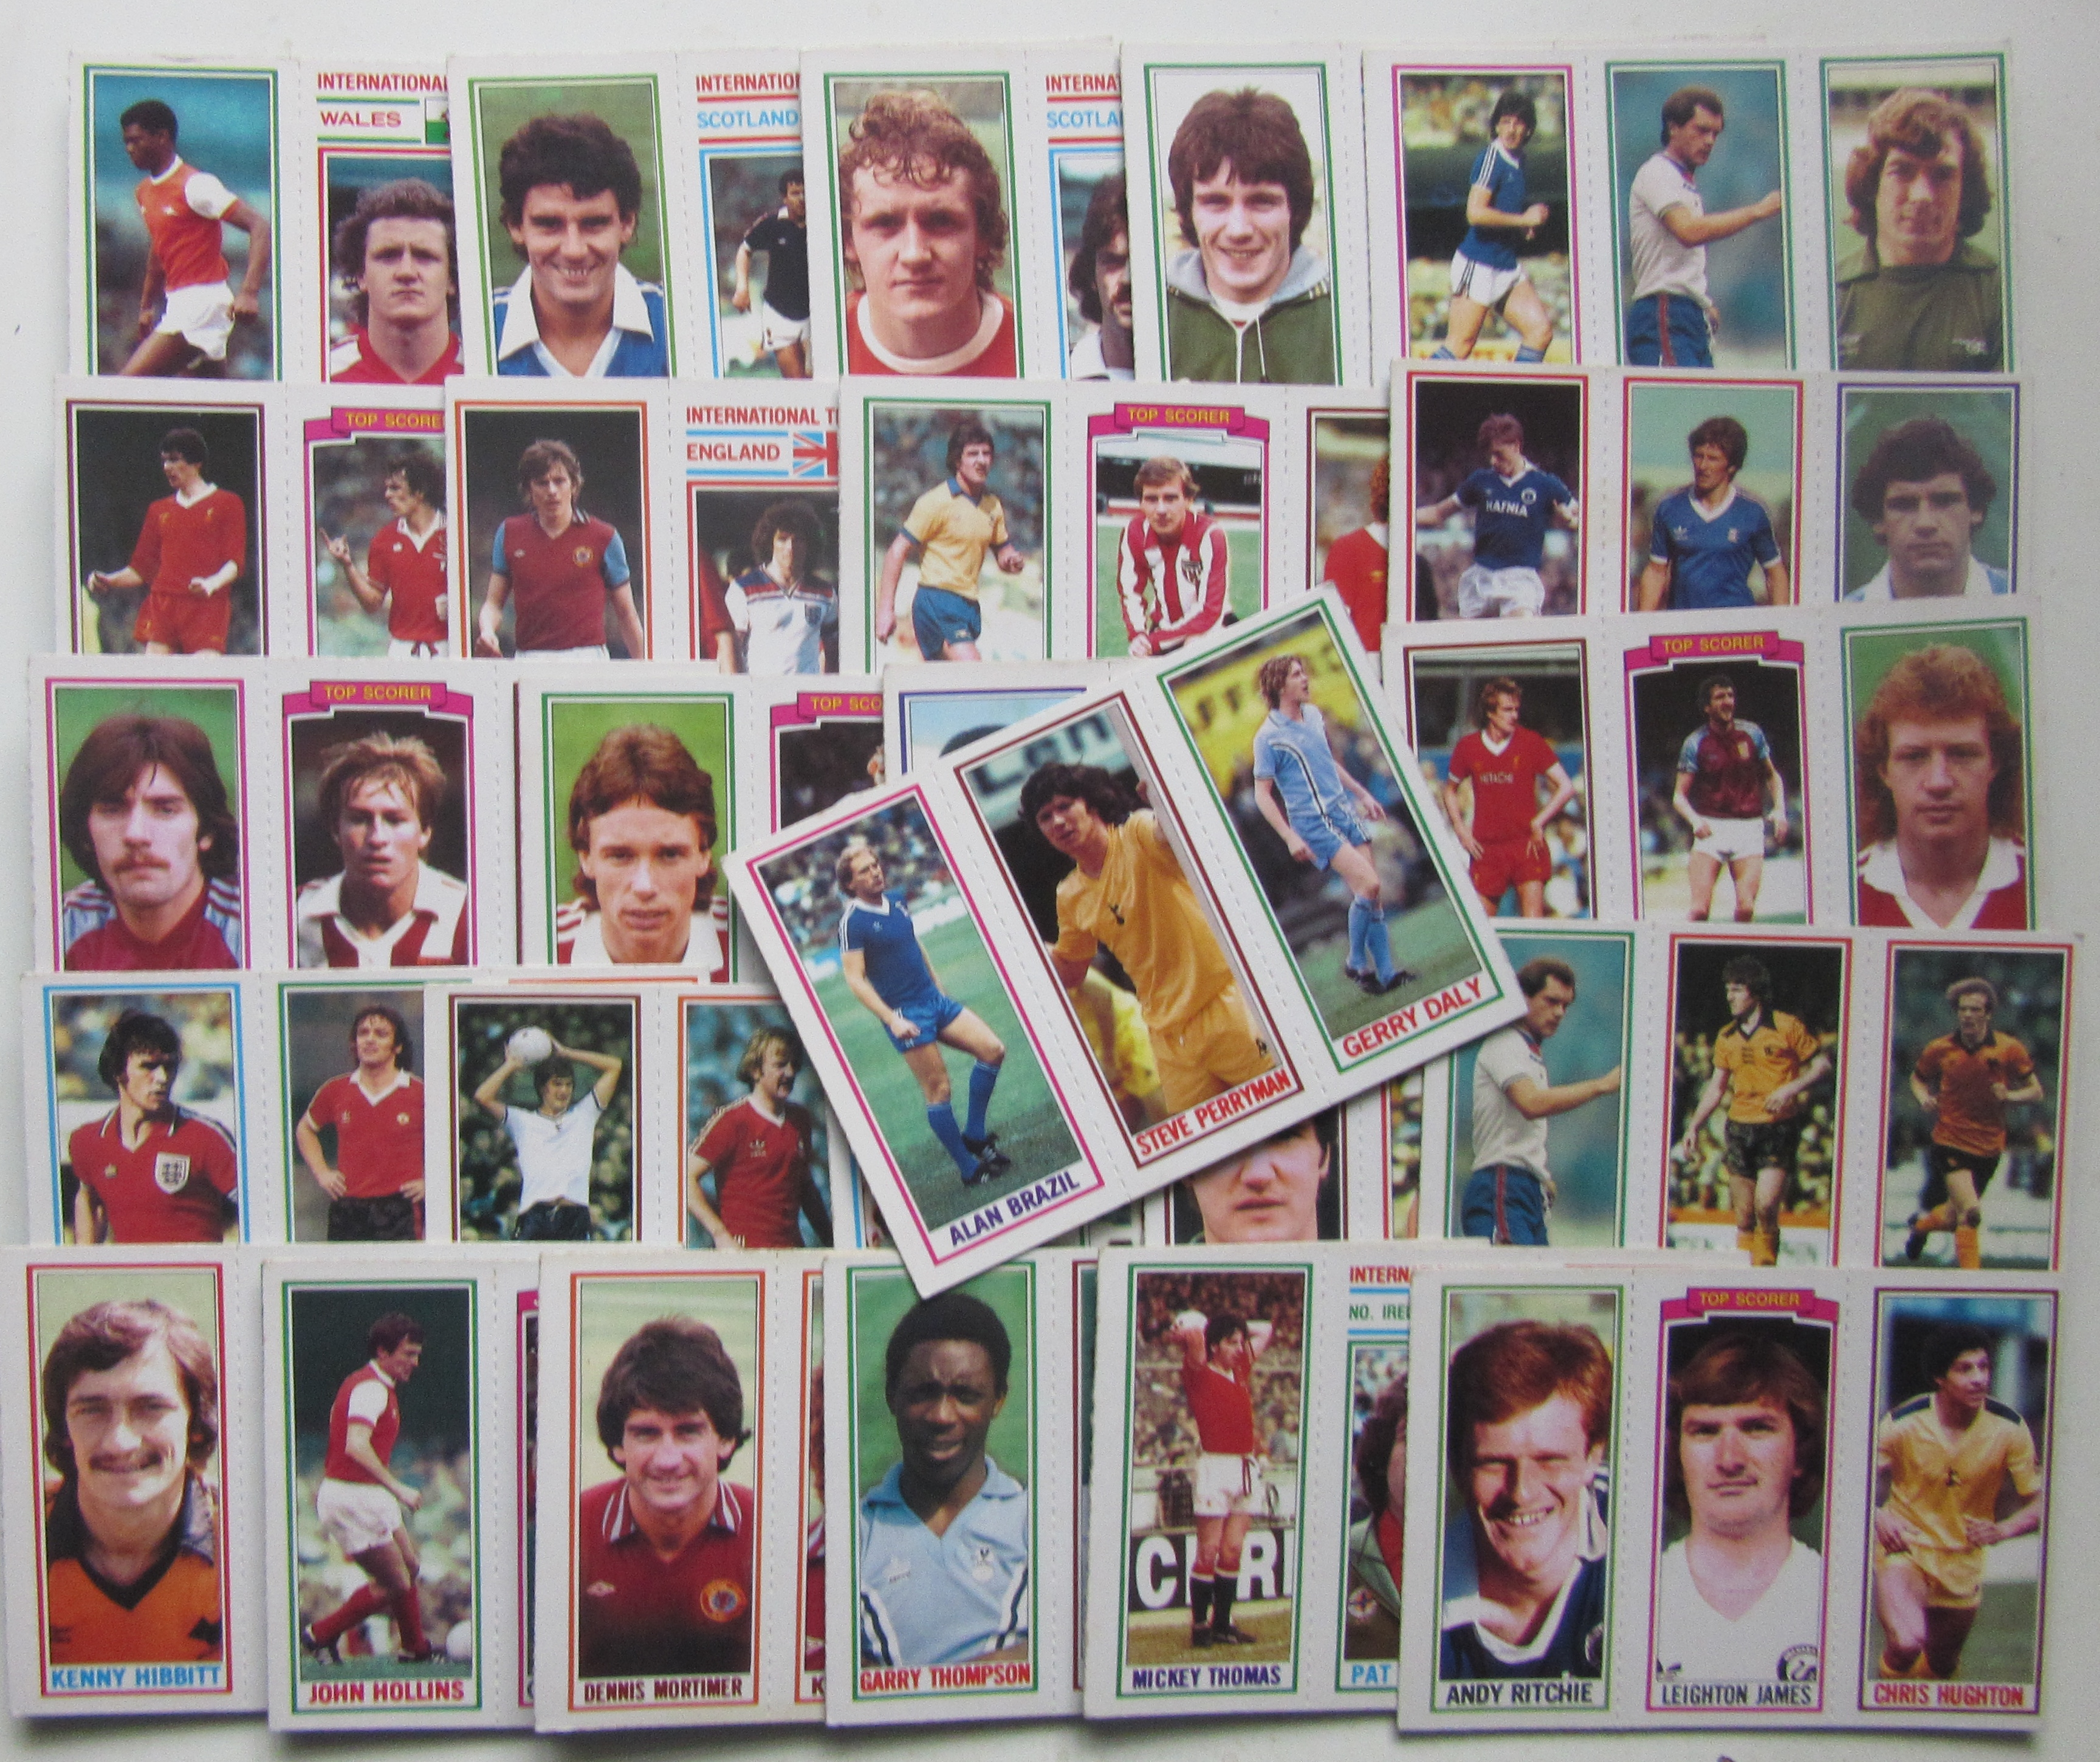 1981 FOOTBALL TRADE CARDS